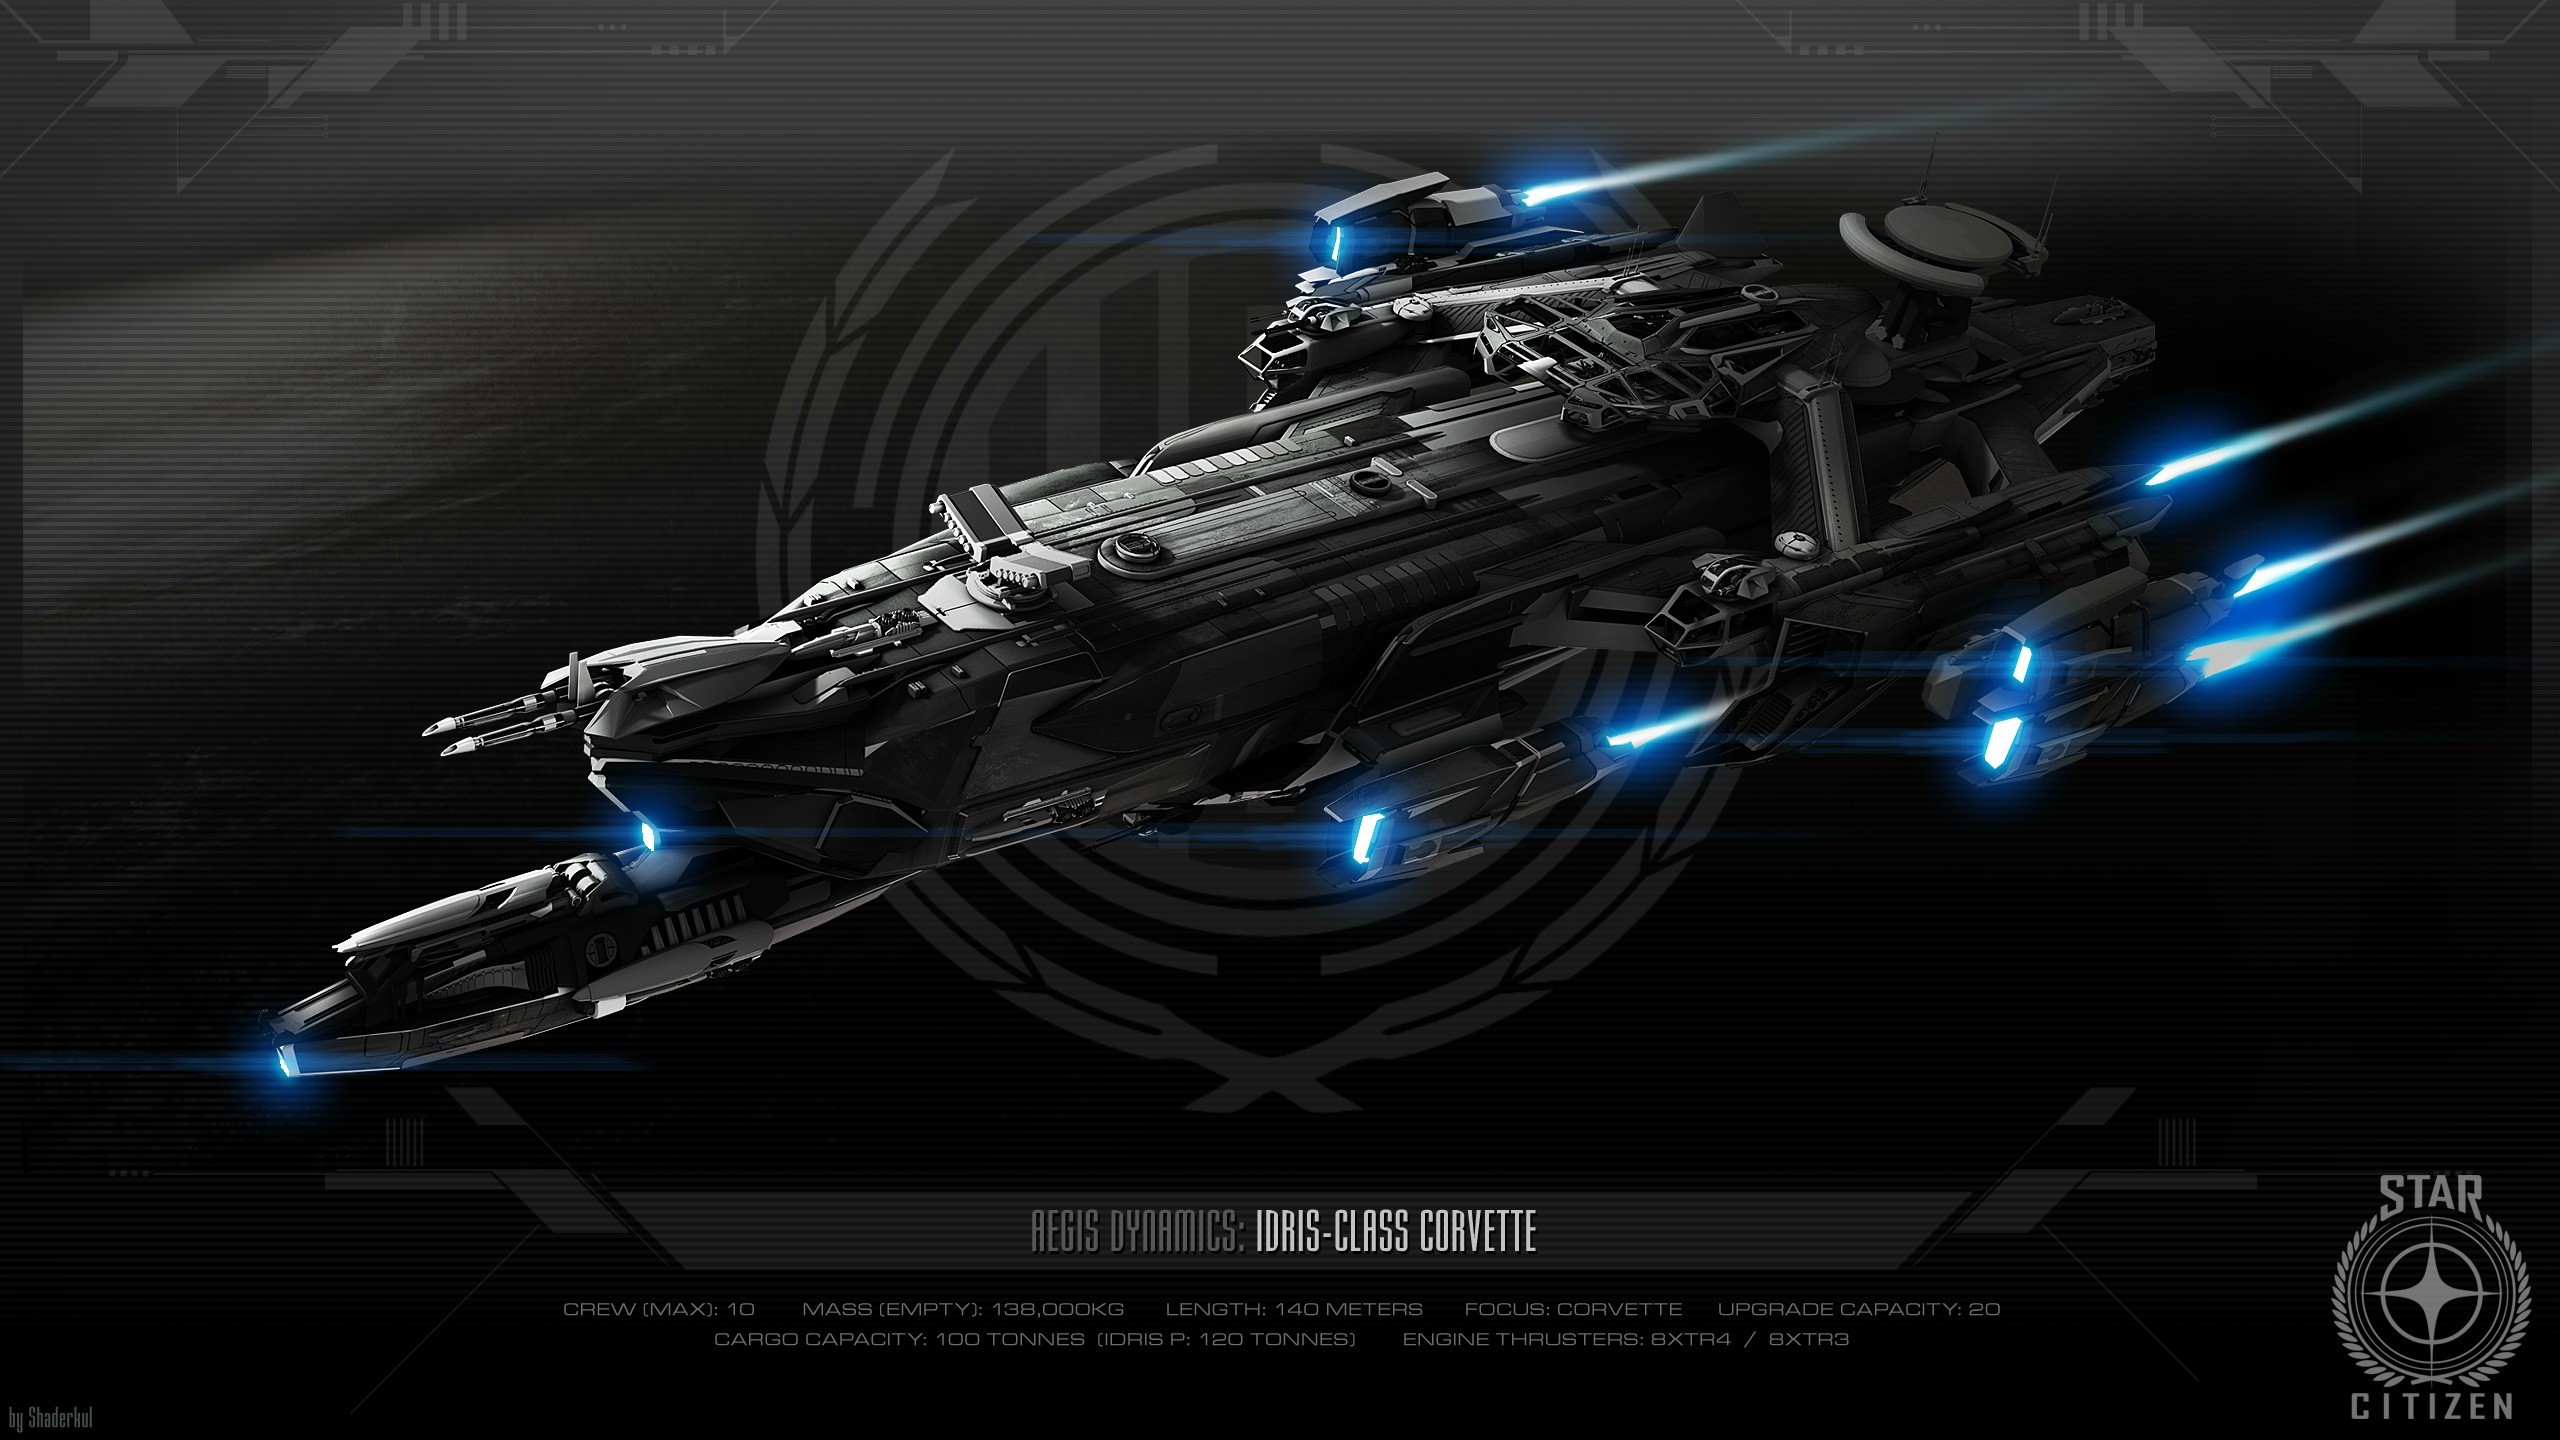 General 2560x1440 Robert Space Industries Corvette Idris spaceship Aegis Dynamics video games PC gaming vehicle Star Citizen science fiction